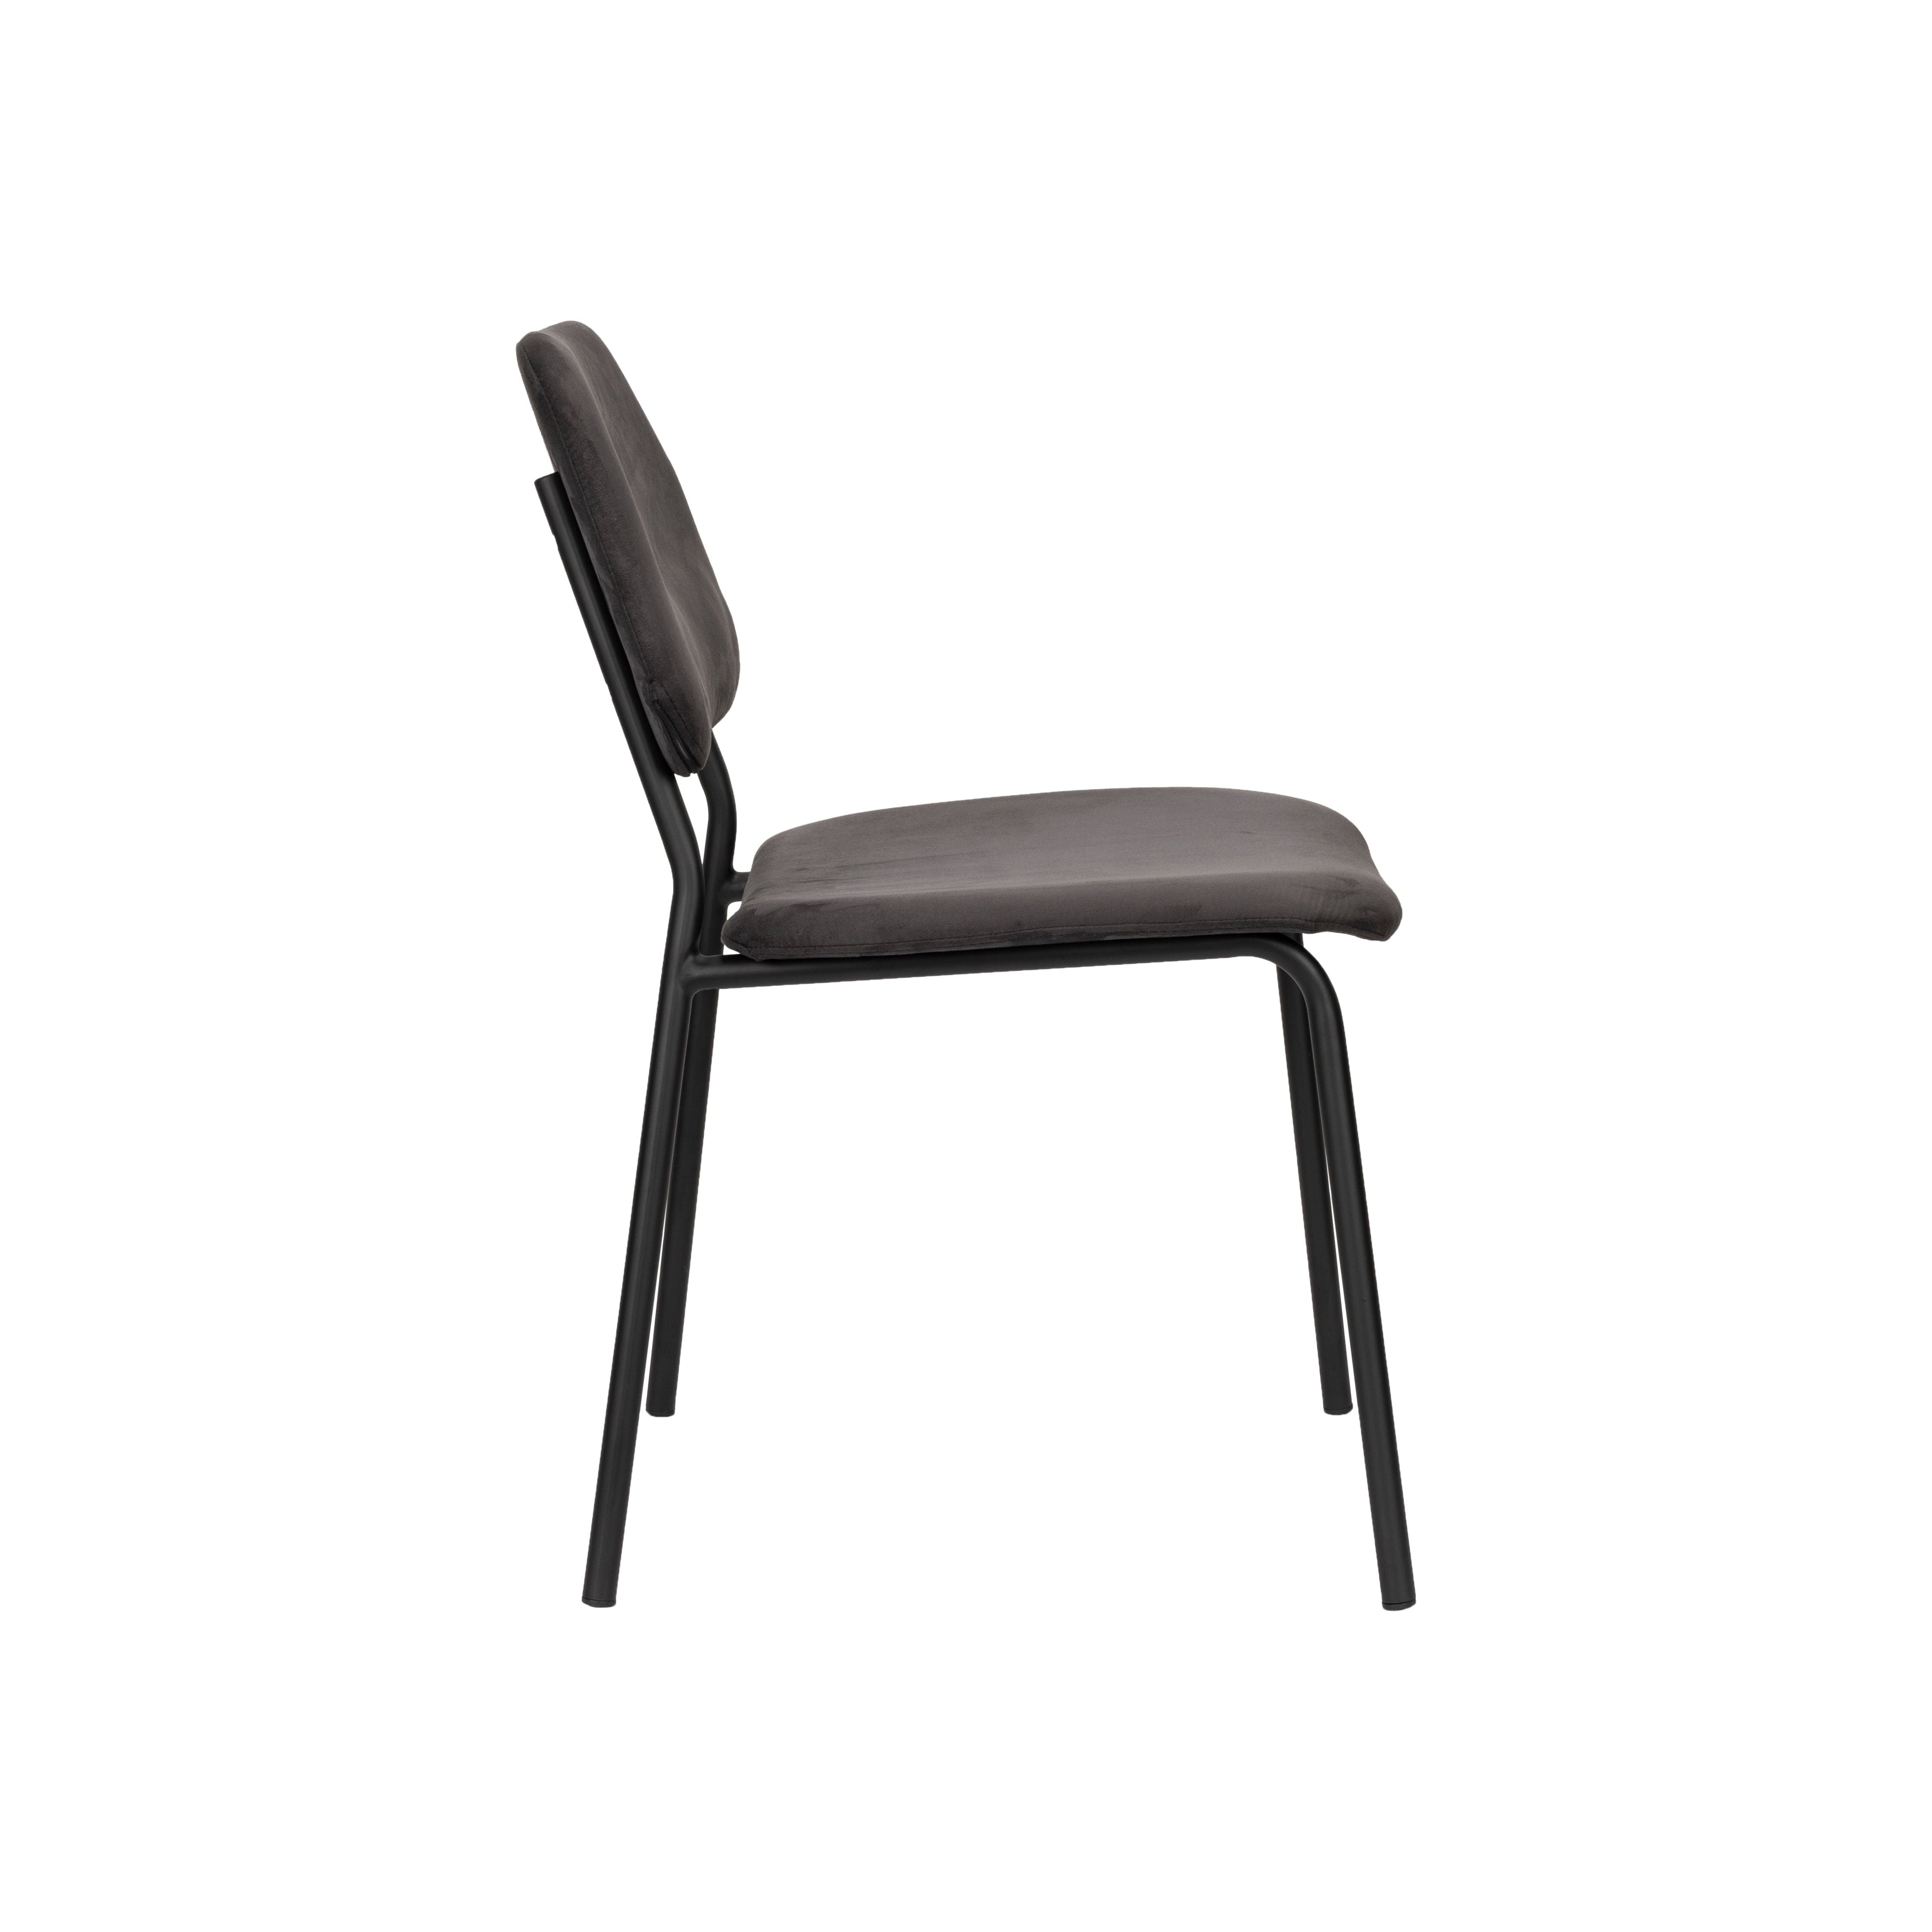 Chair darby black